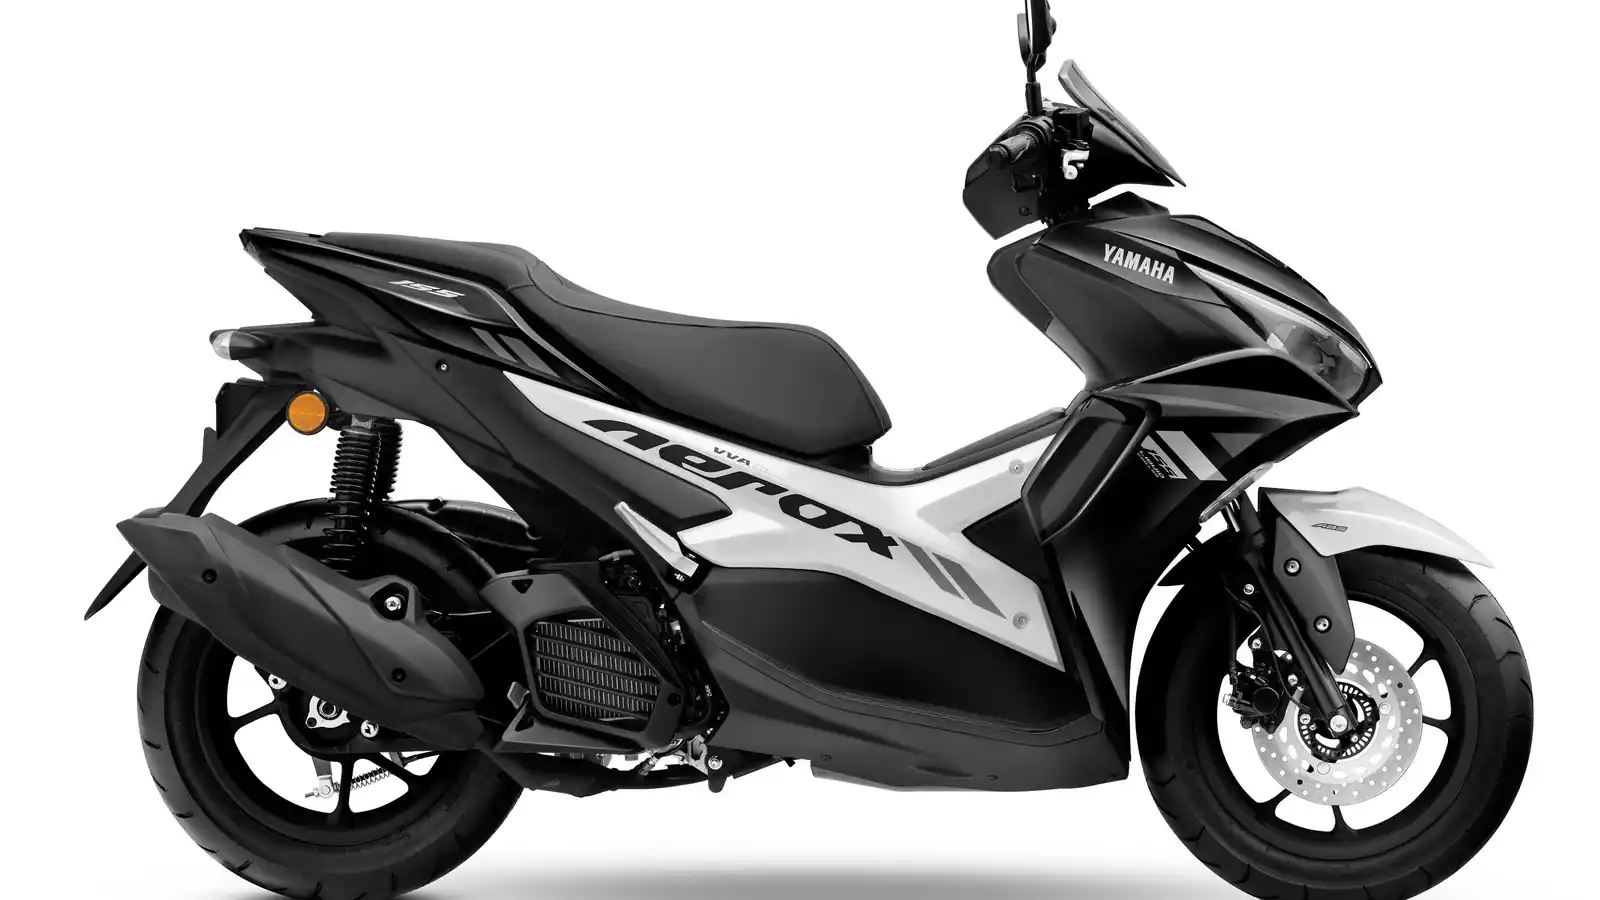 Yamaha Aerox 155 review